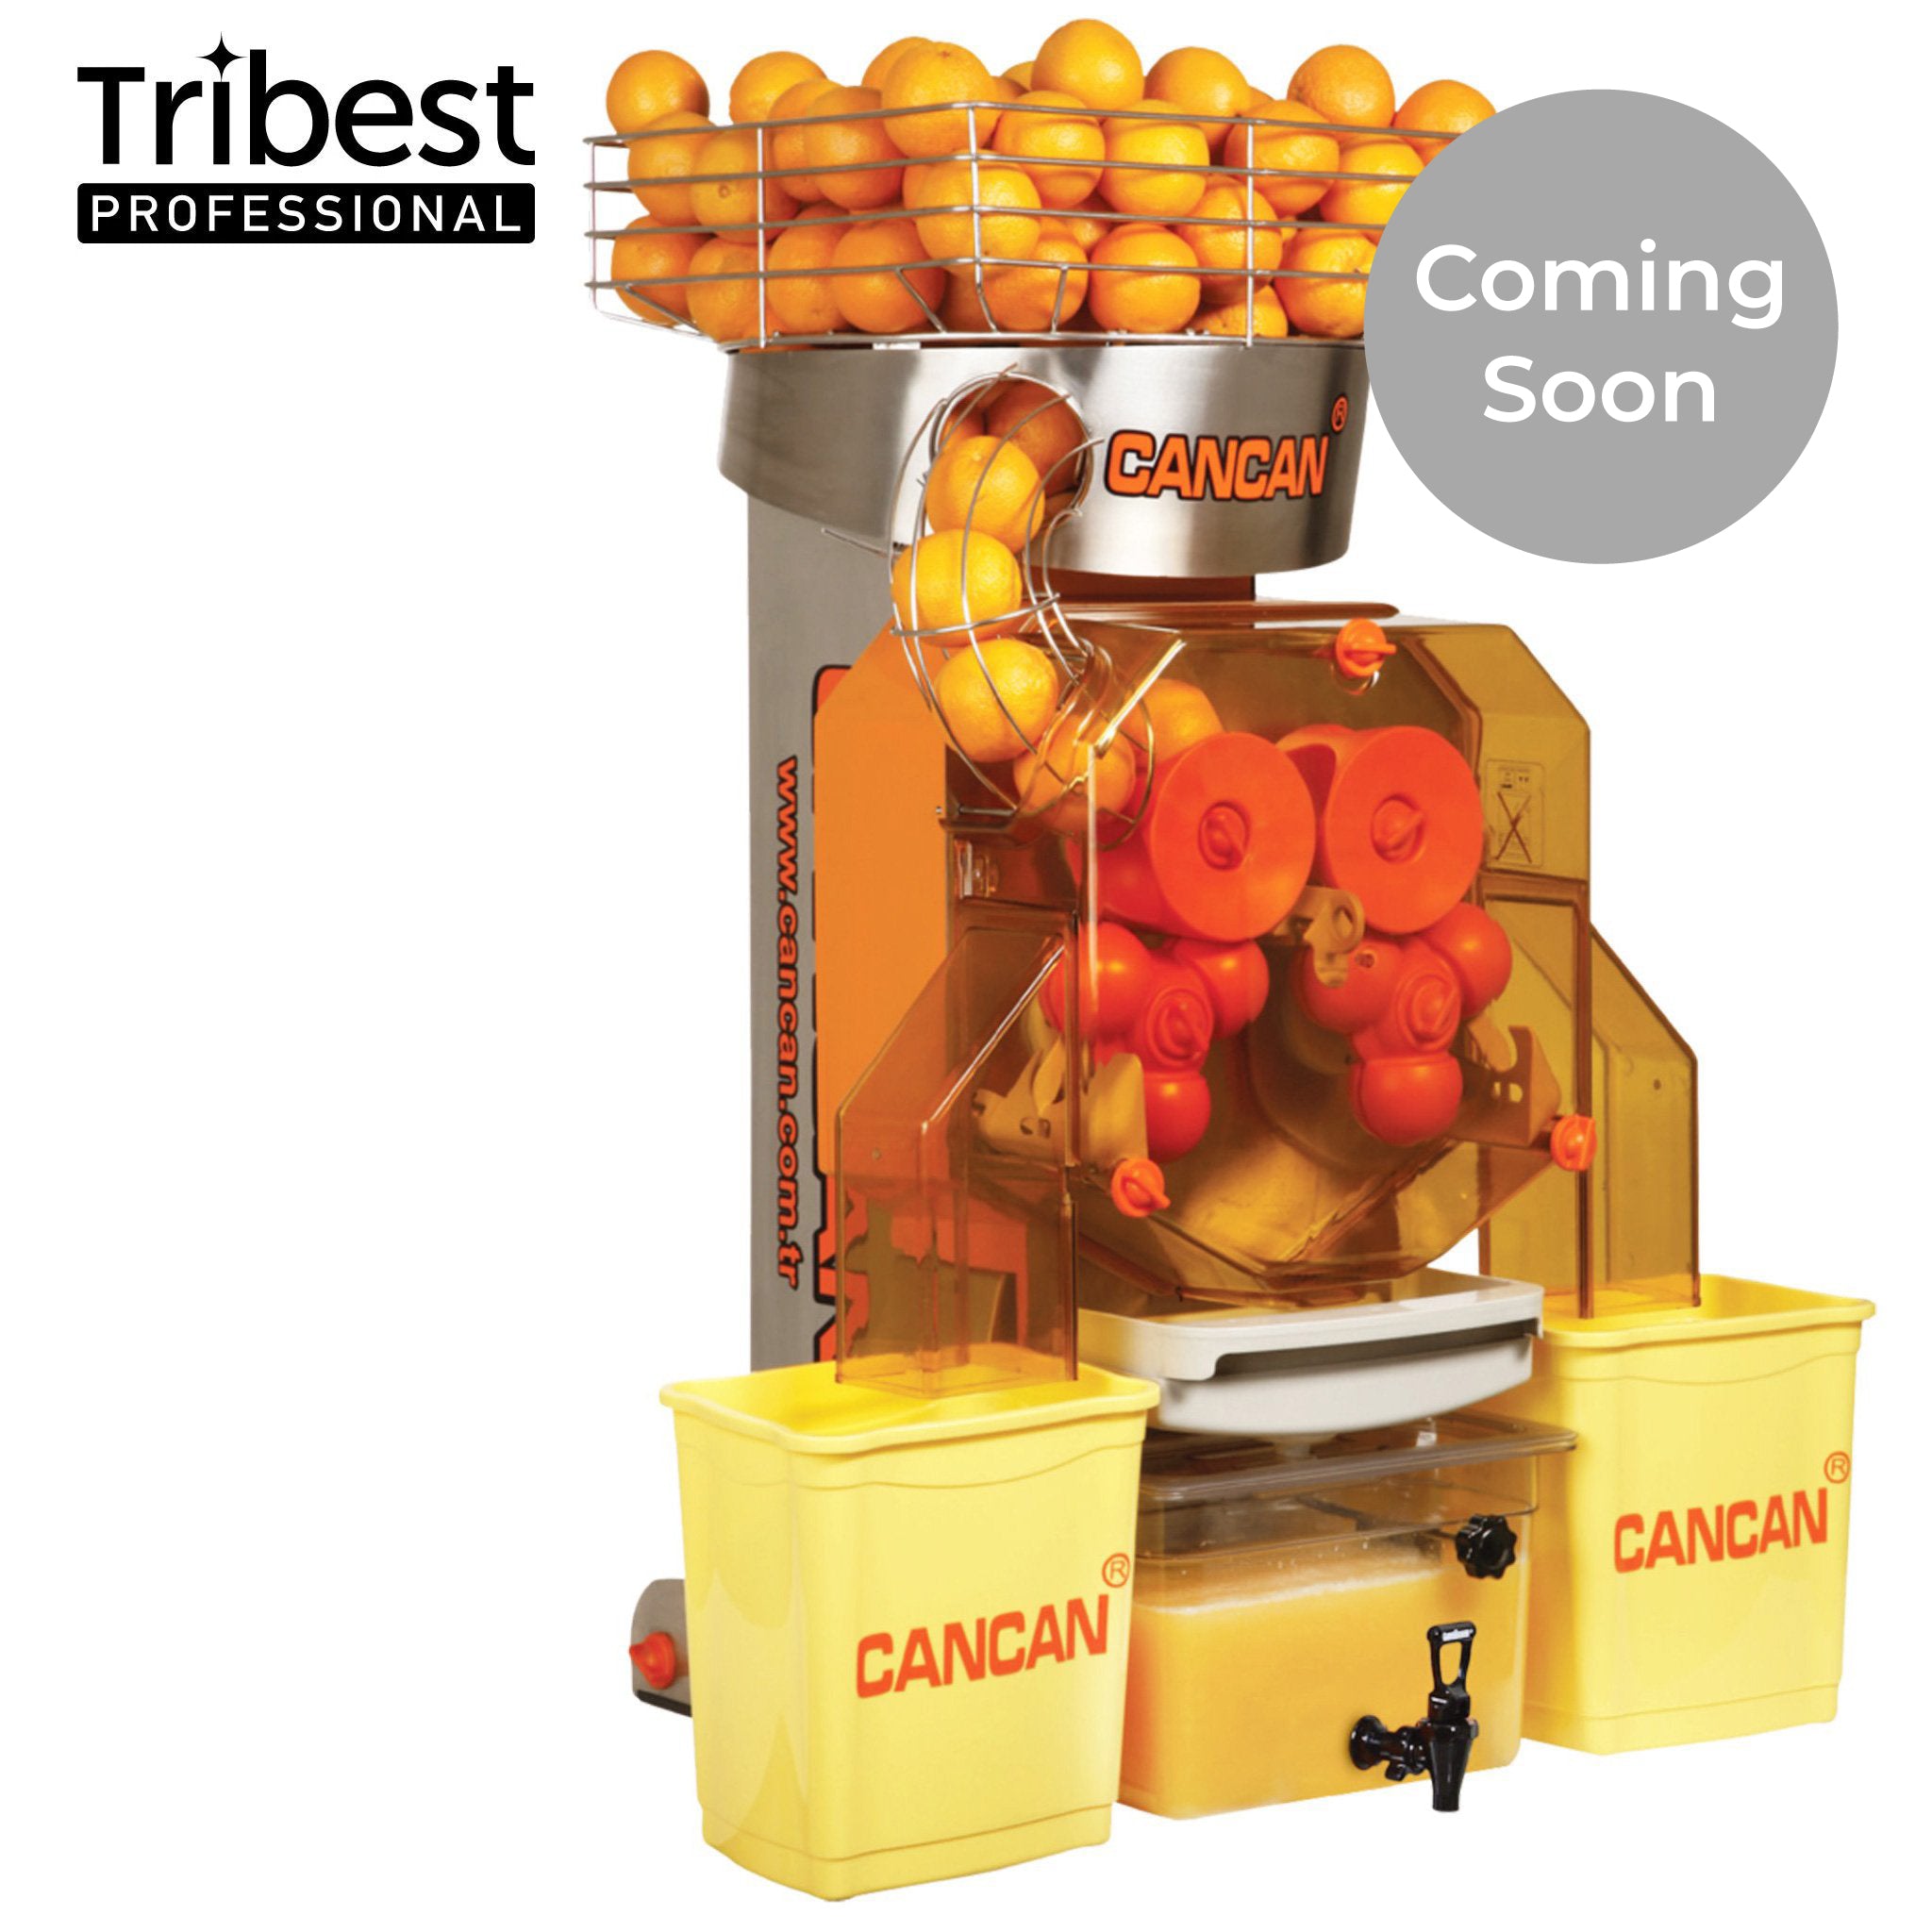 Tribest Professional Cancan Large Capacity Automatic Orange Juicer